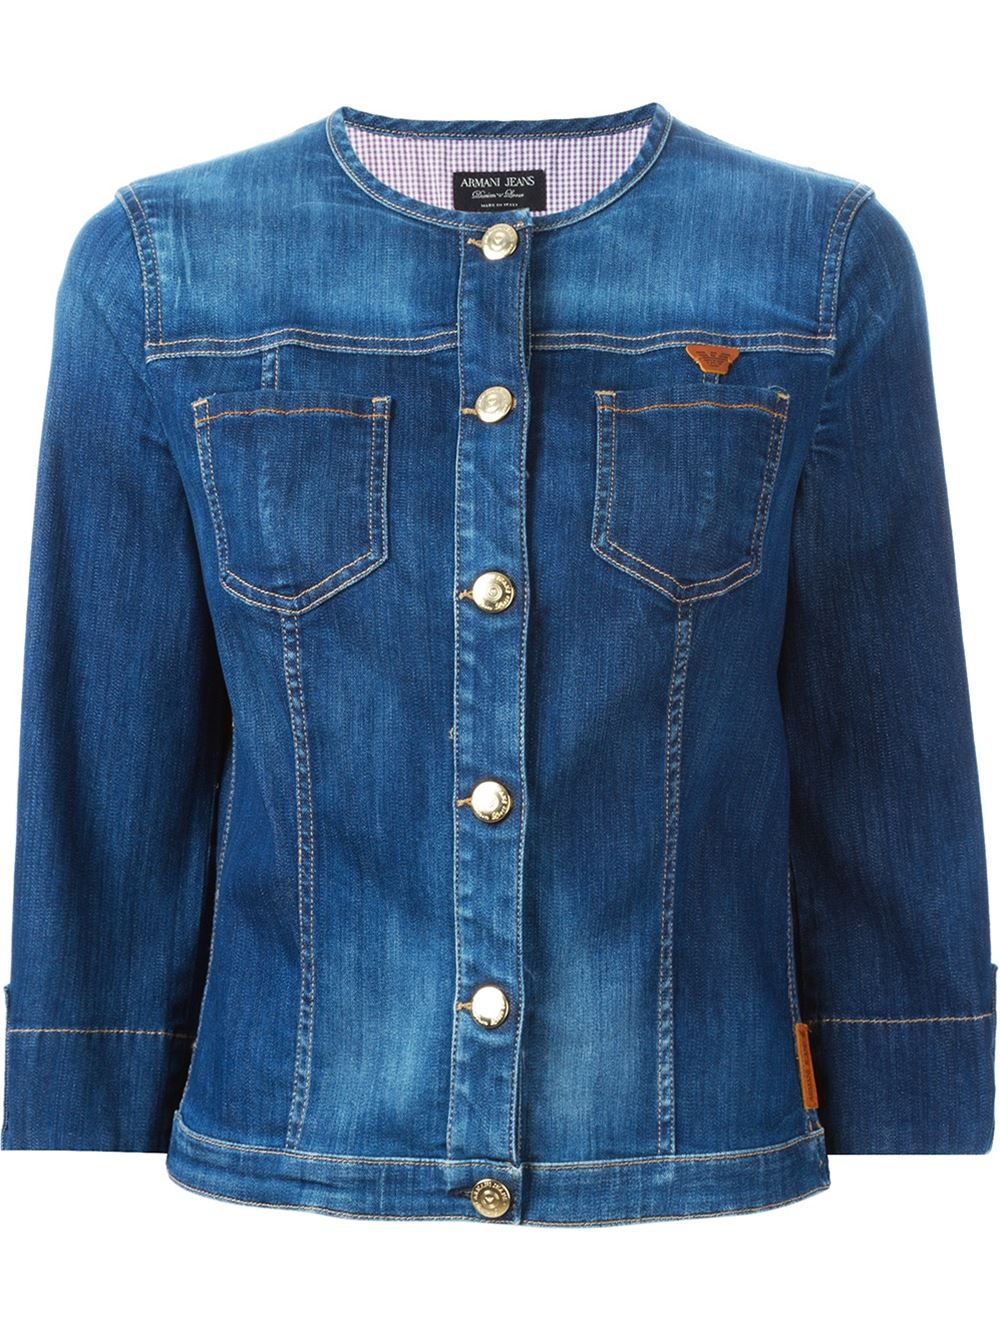 Lyst - Armani Jeans Collarless Denim Jacket in Blue